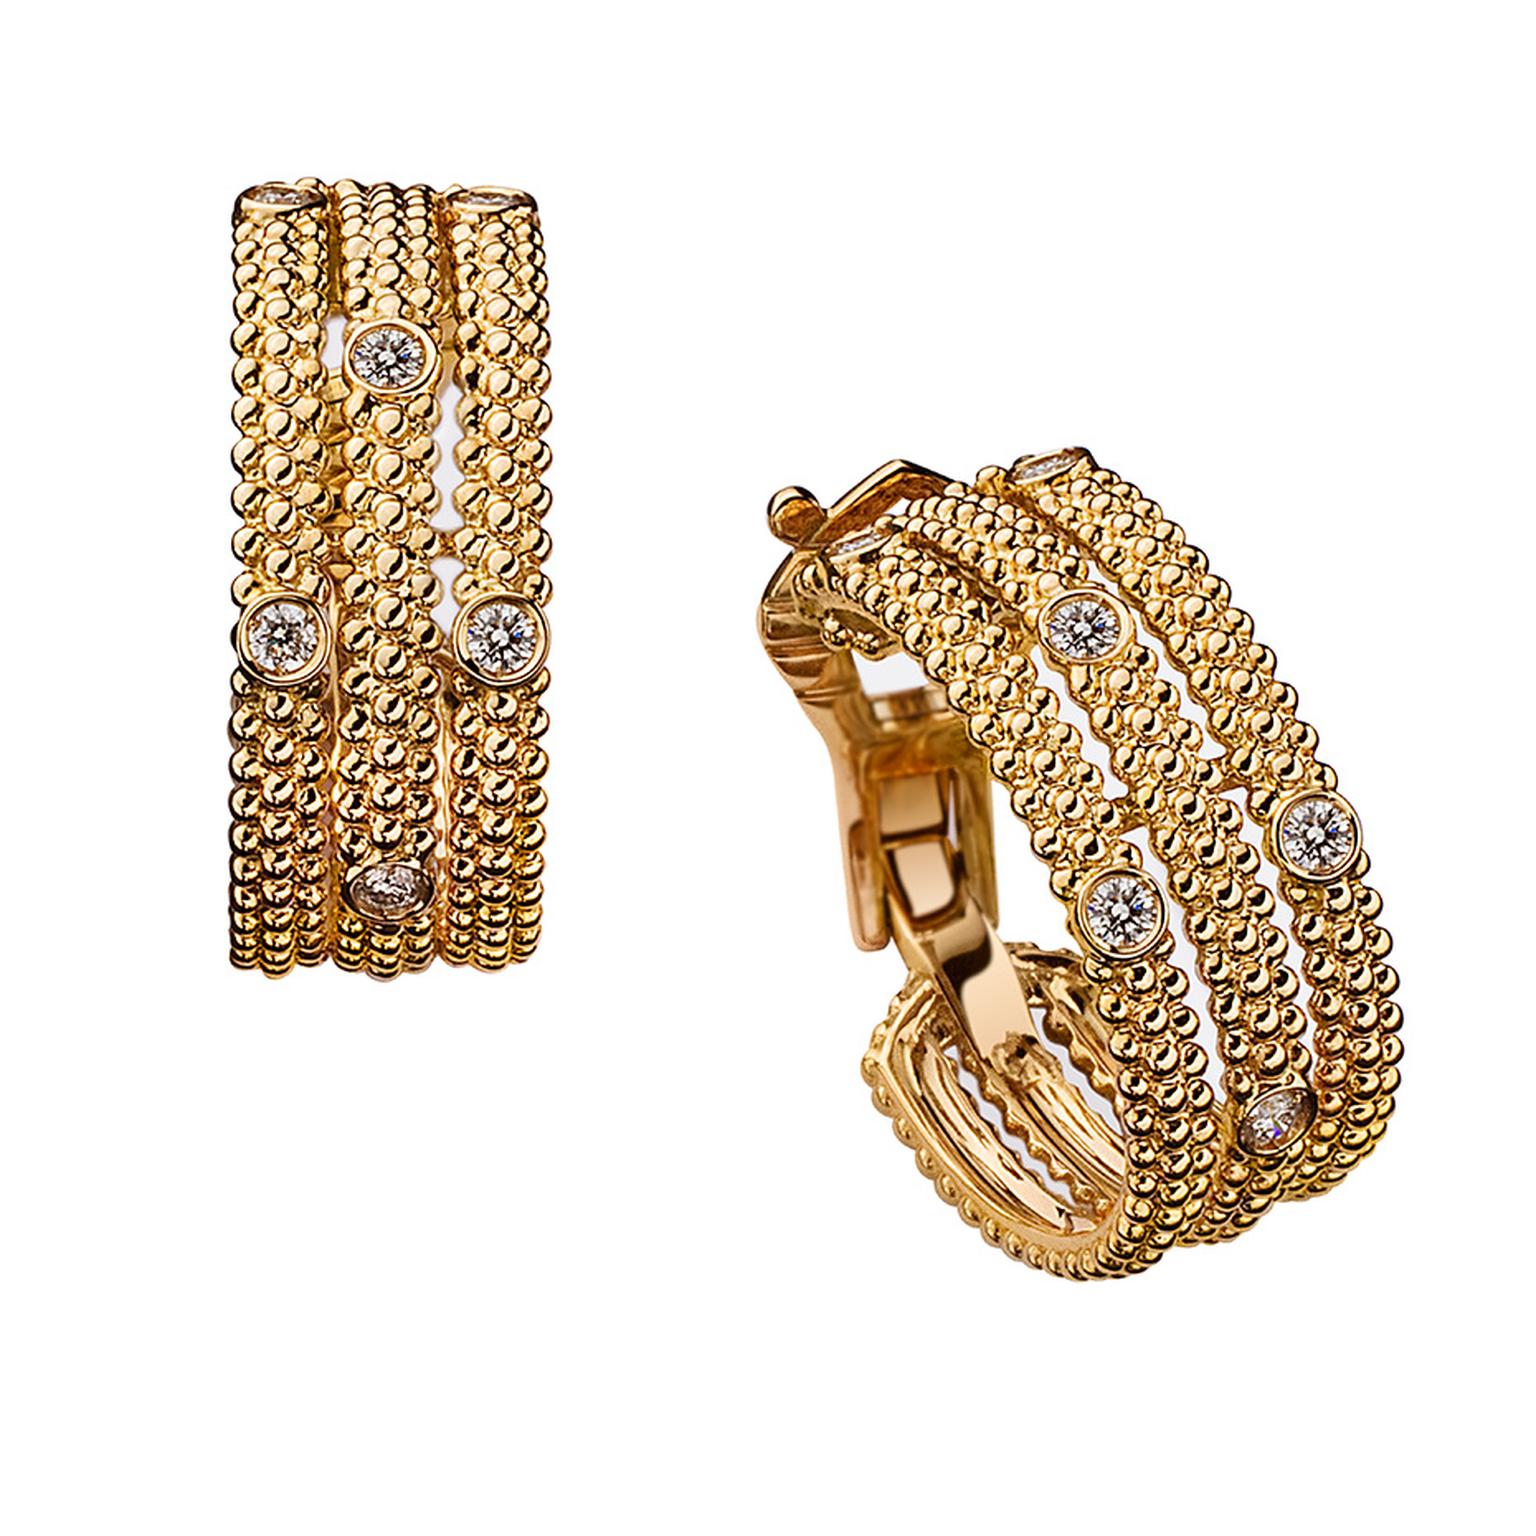 Mauboussin Le Premier Jour earrings in yellow gold, set with asymmetrical diamonds ($2,900).